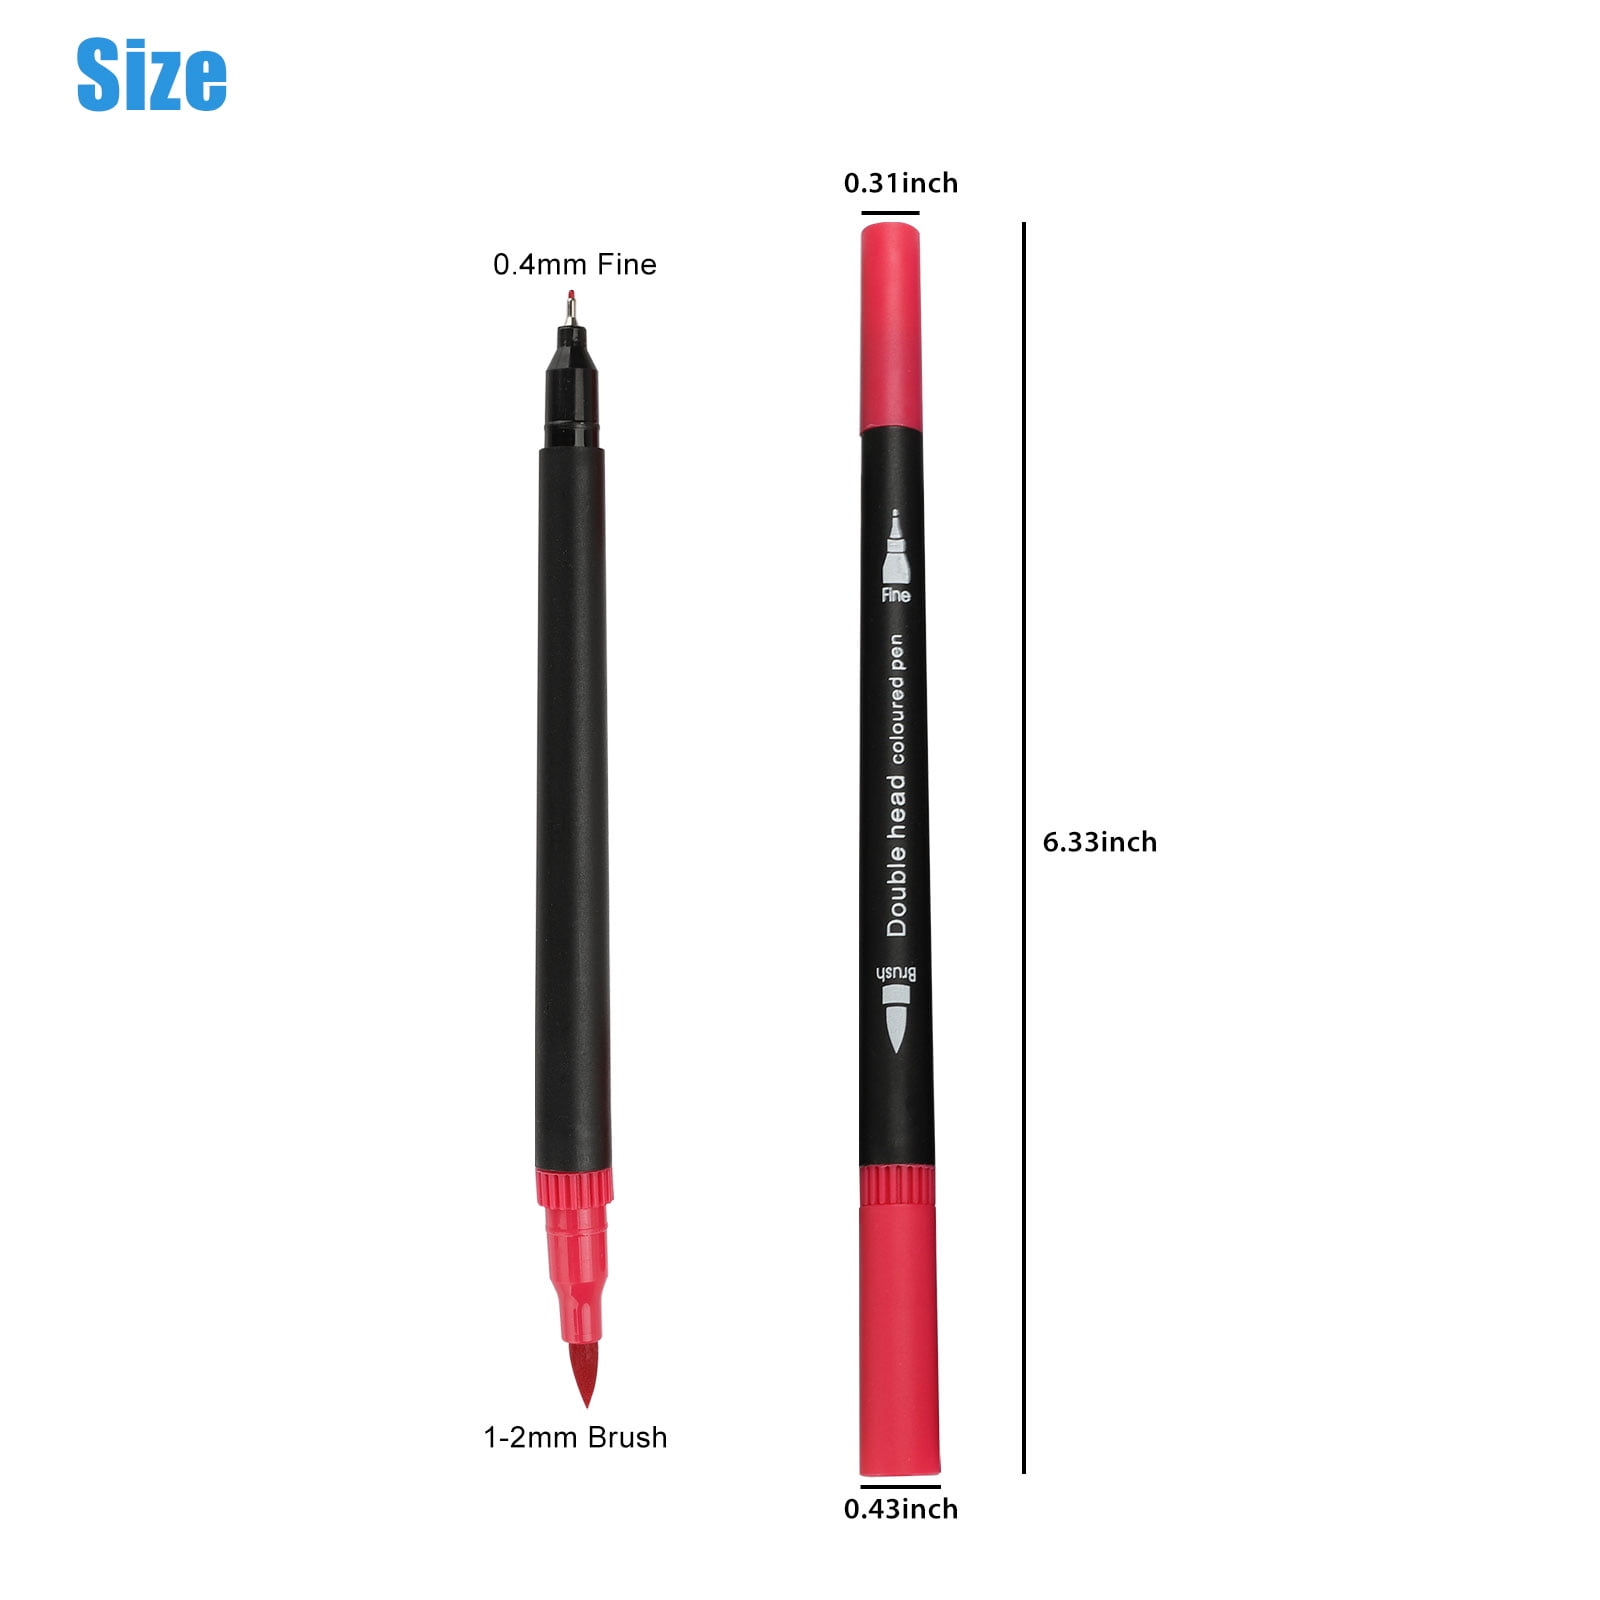 Arteza Dual Tip Brush Pens, 24 Watercolor Calligraphy Markers, Bright and Neon Tones, Nylon Brush and Fine Tip for Illustrati